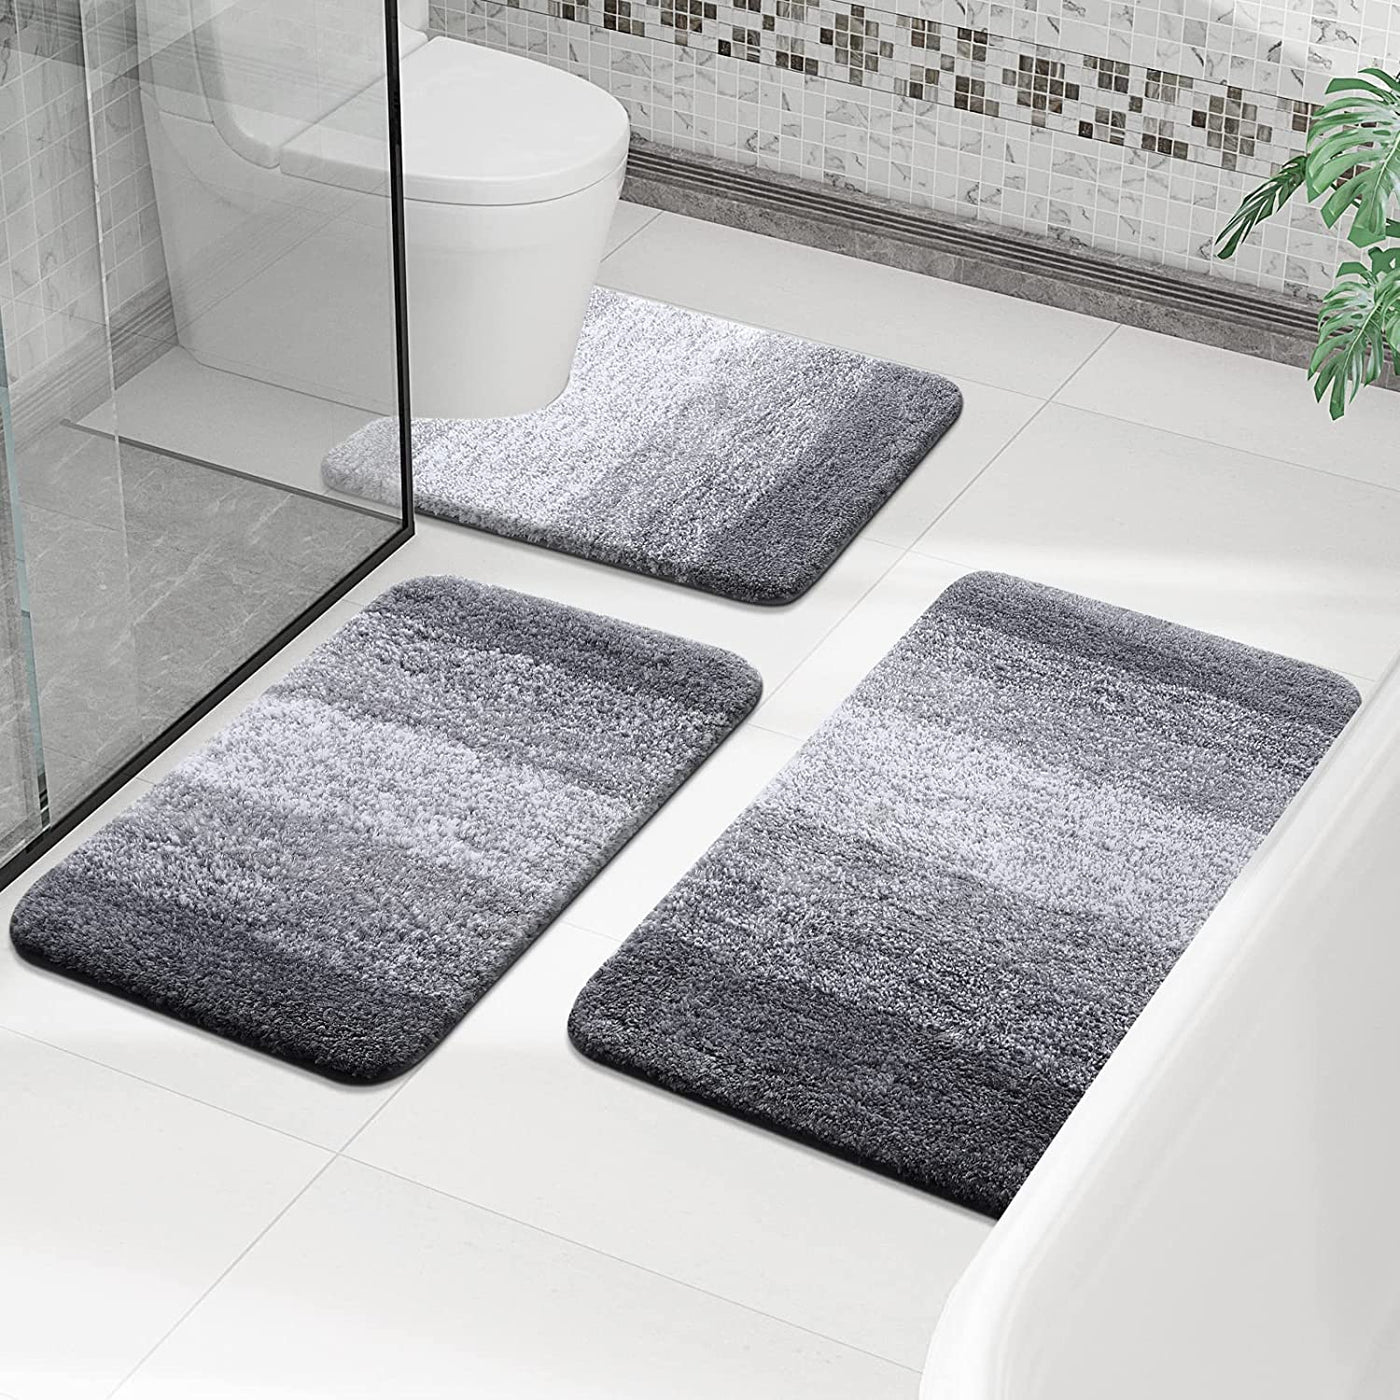 Luxury Bathroom Rug Set 2 Piece, Soft Absorbent